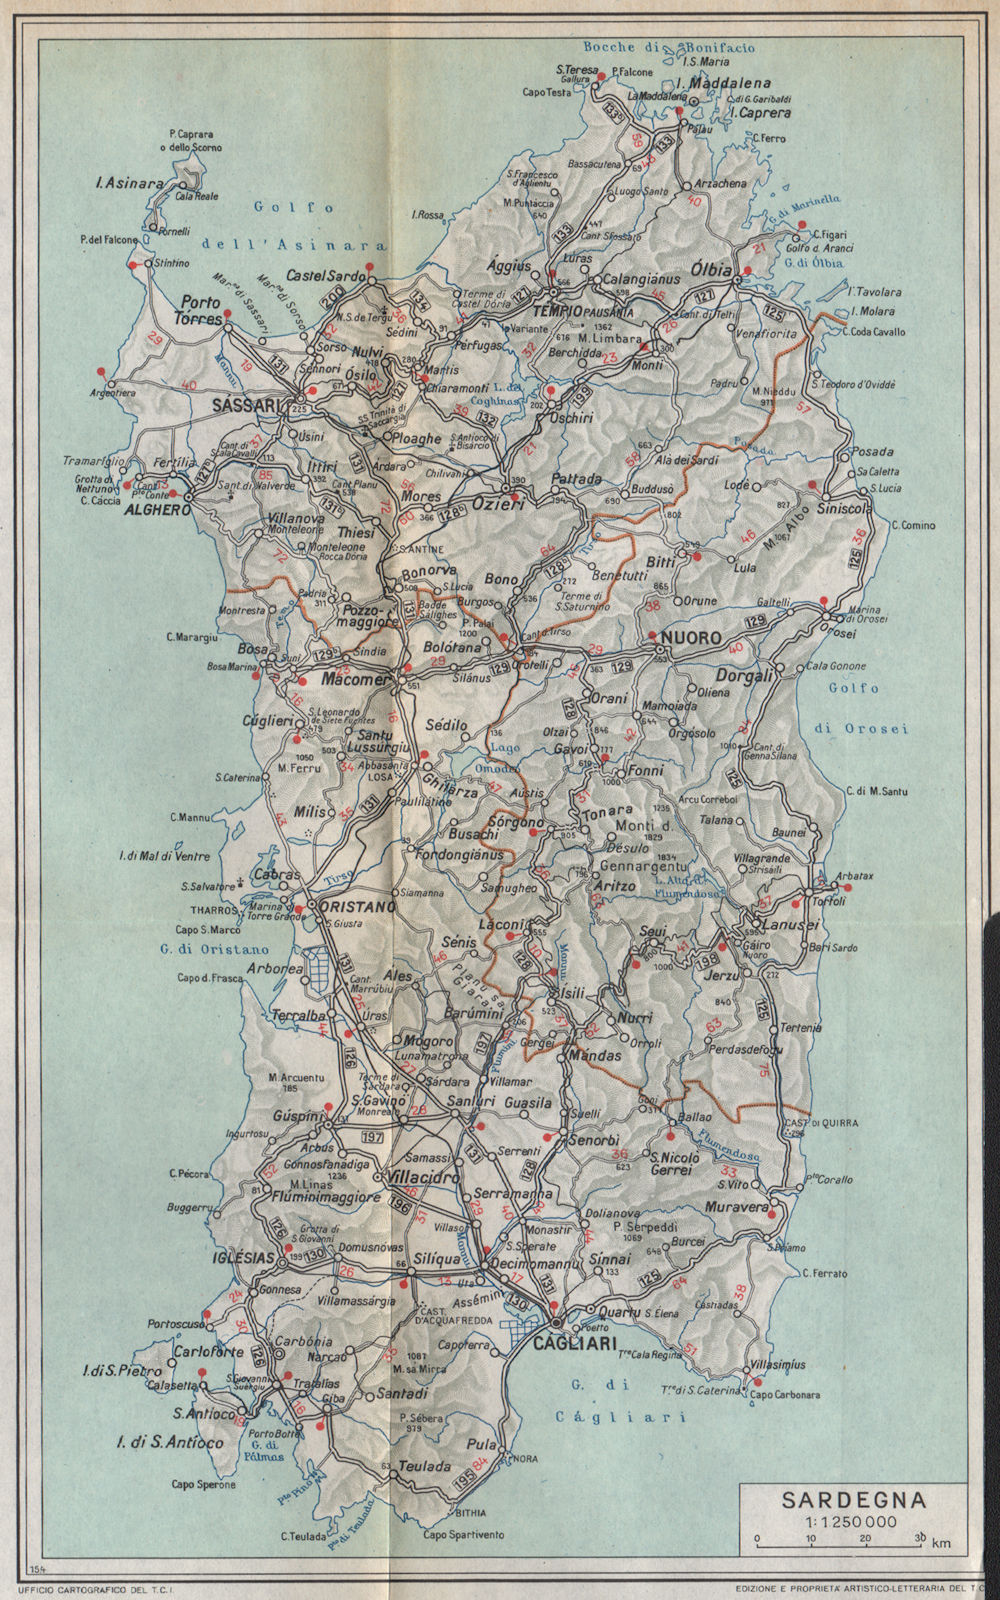 SARDEGNA Sardinia vintage map. Roads railways. Italy 1958 old vintage